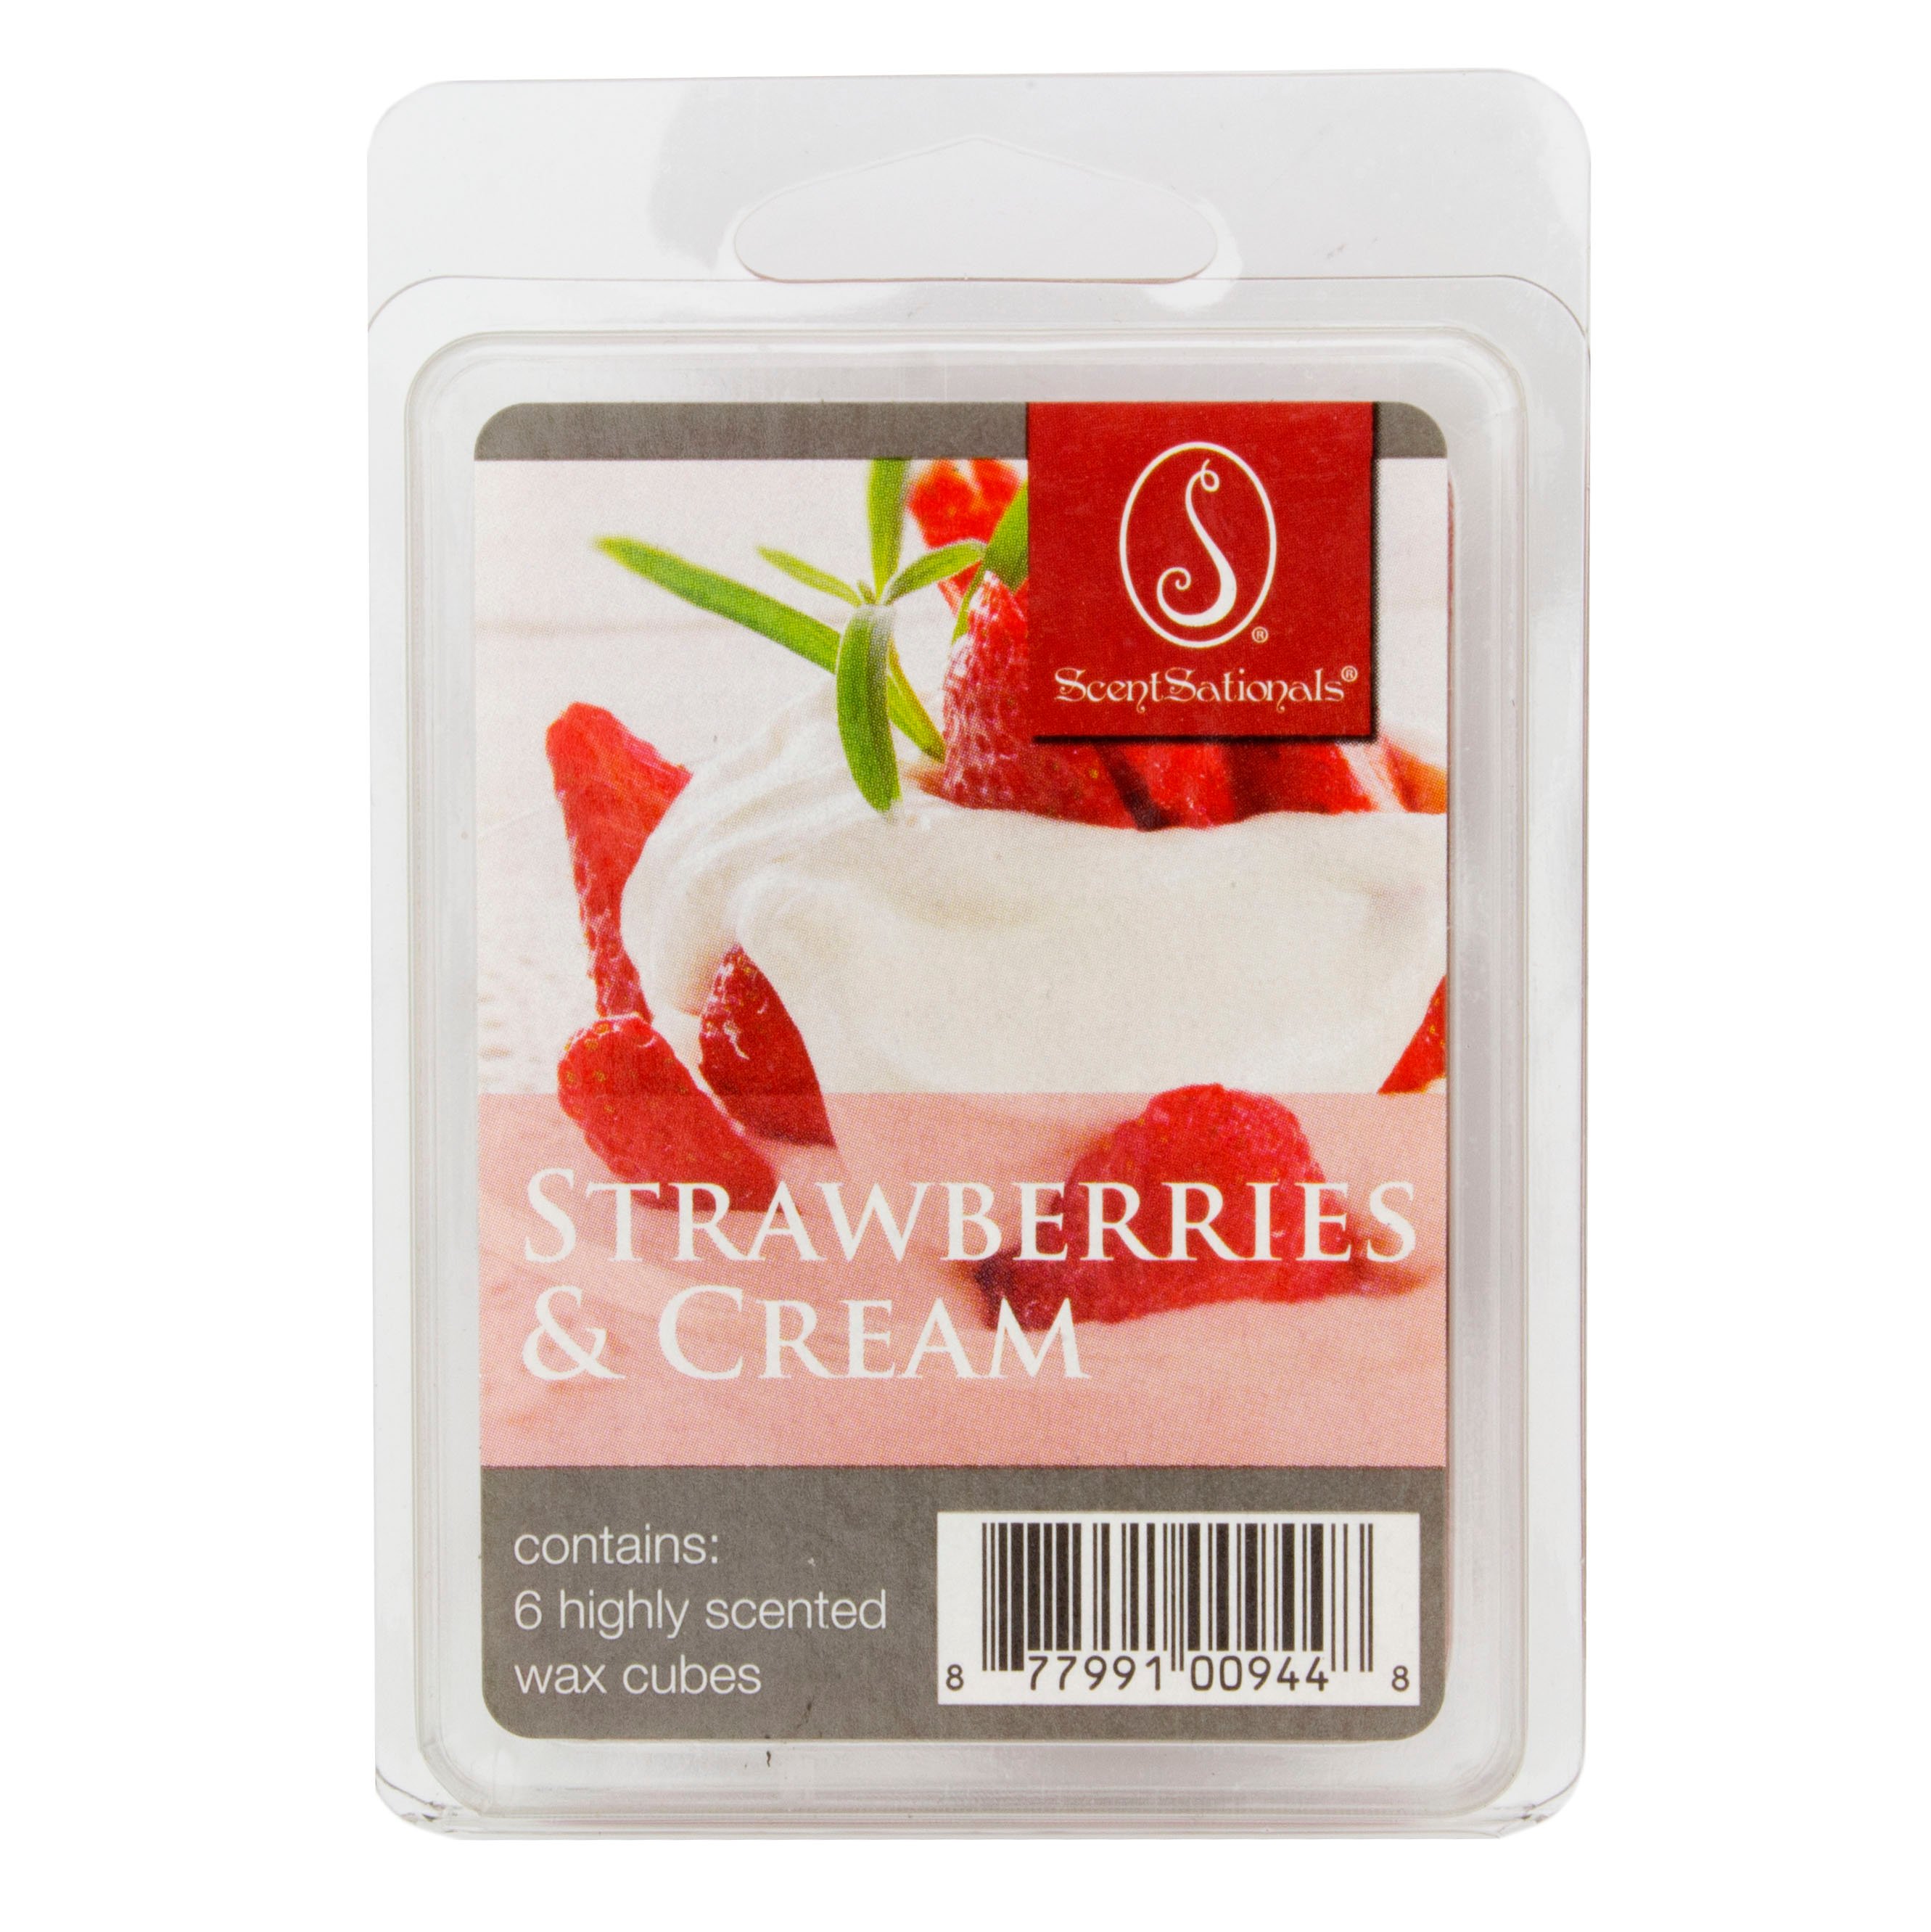  Scentsationals Scented Wax Cubes - Strawberries